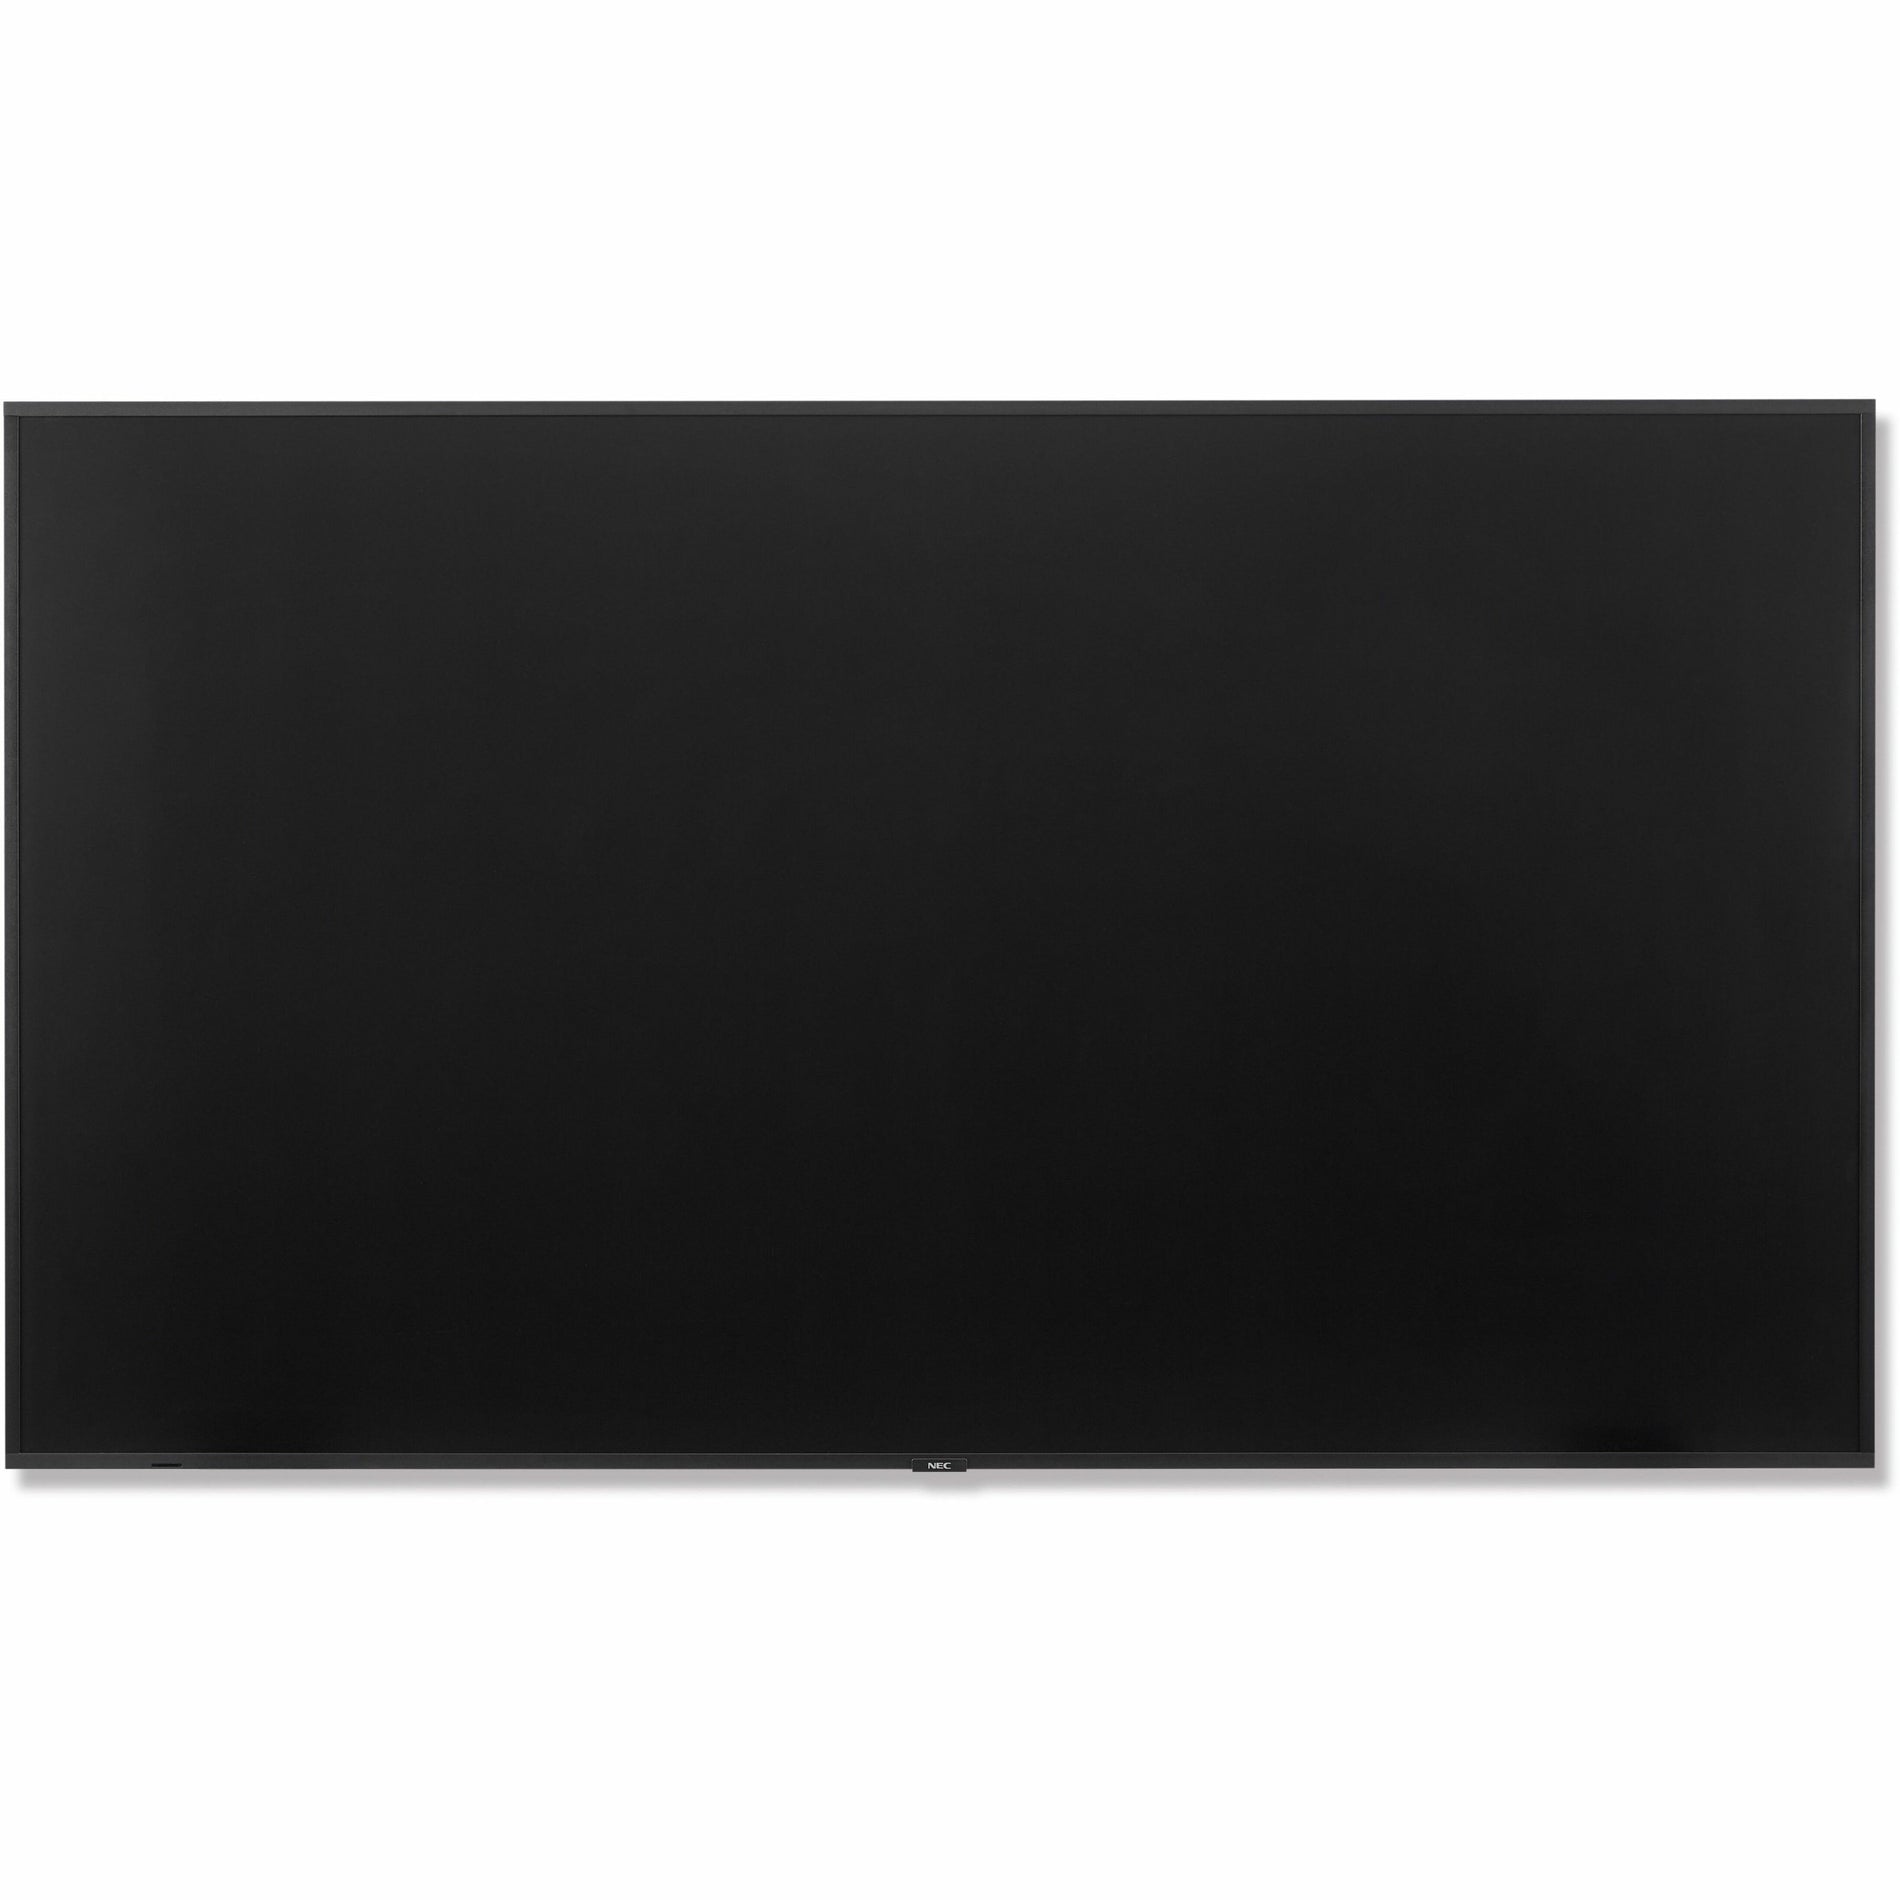 Sharp NEC Display M981 98" Ultra High Definition Professional Display, 4K HDR LCD, 500 Nit Brightness, 10-bit Color Depth, 3 Year Warranty, ENERGY STAR 8.0